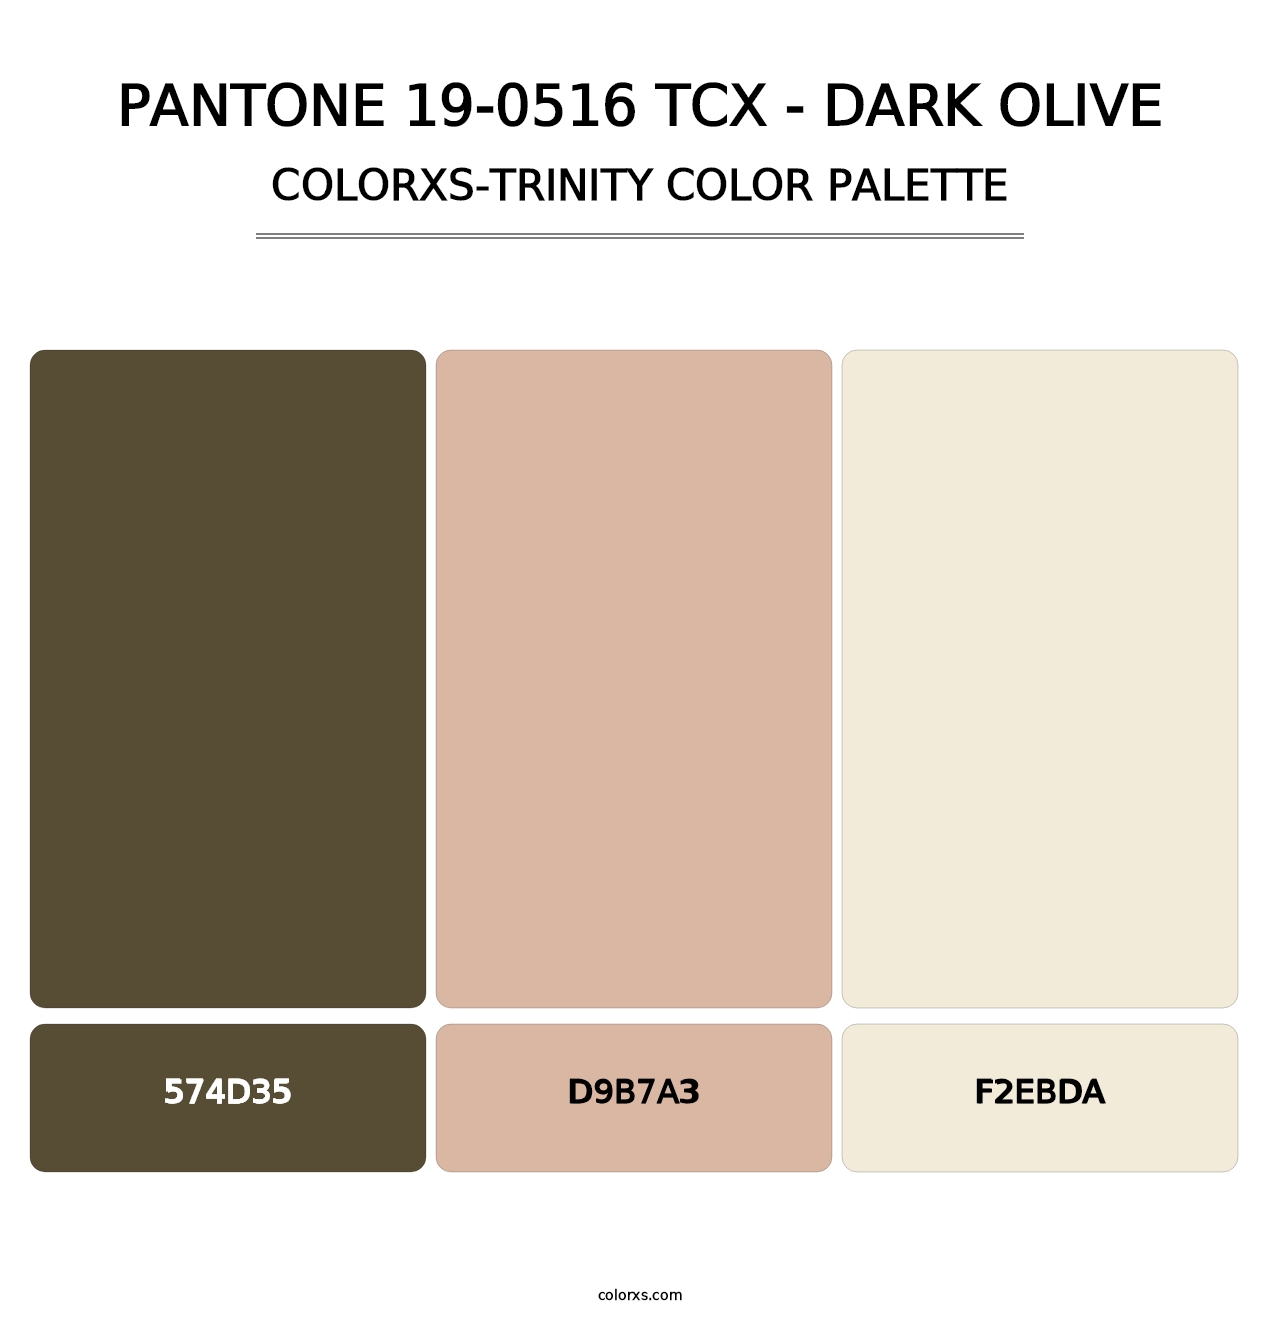 PANTONE 19-0516 TCX - Dark Olive - Colorxs Trinity Palette